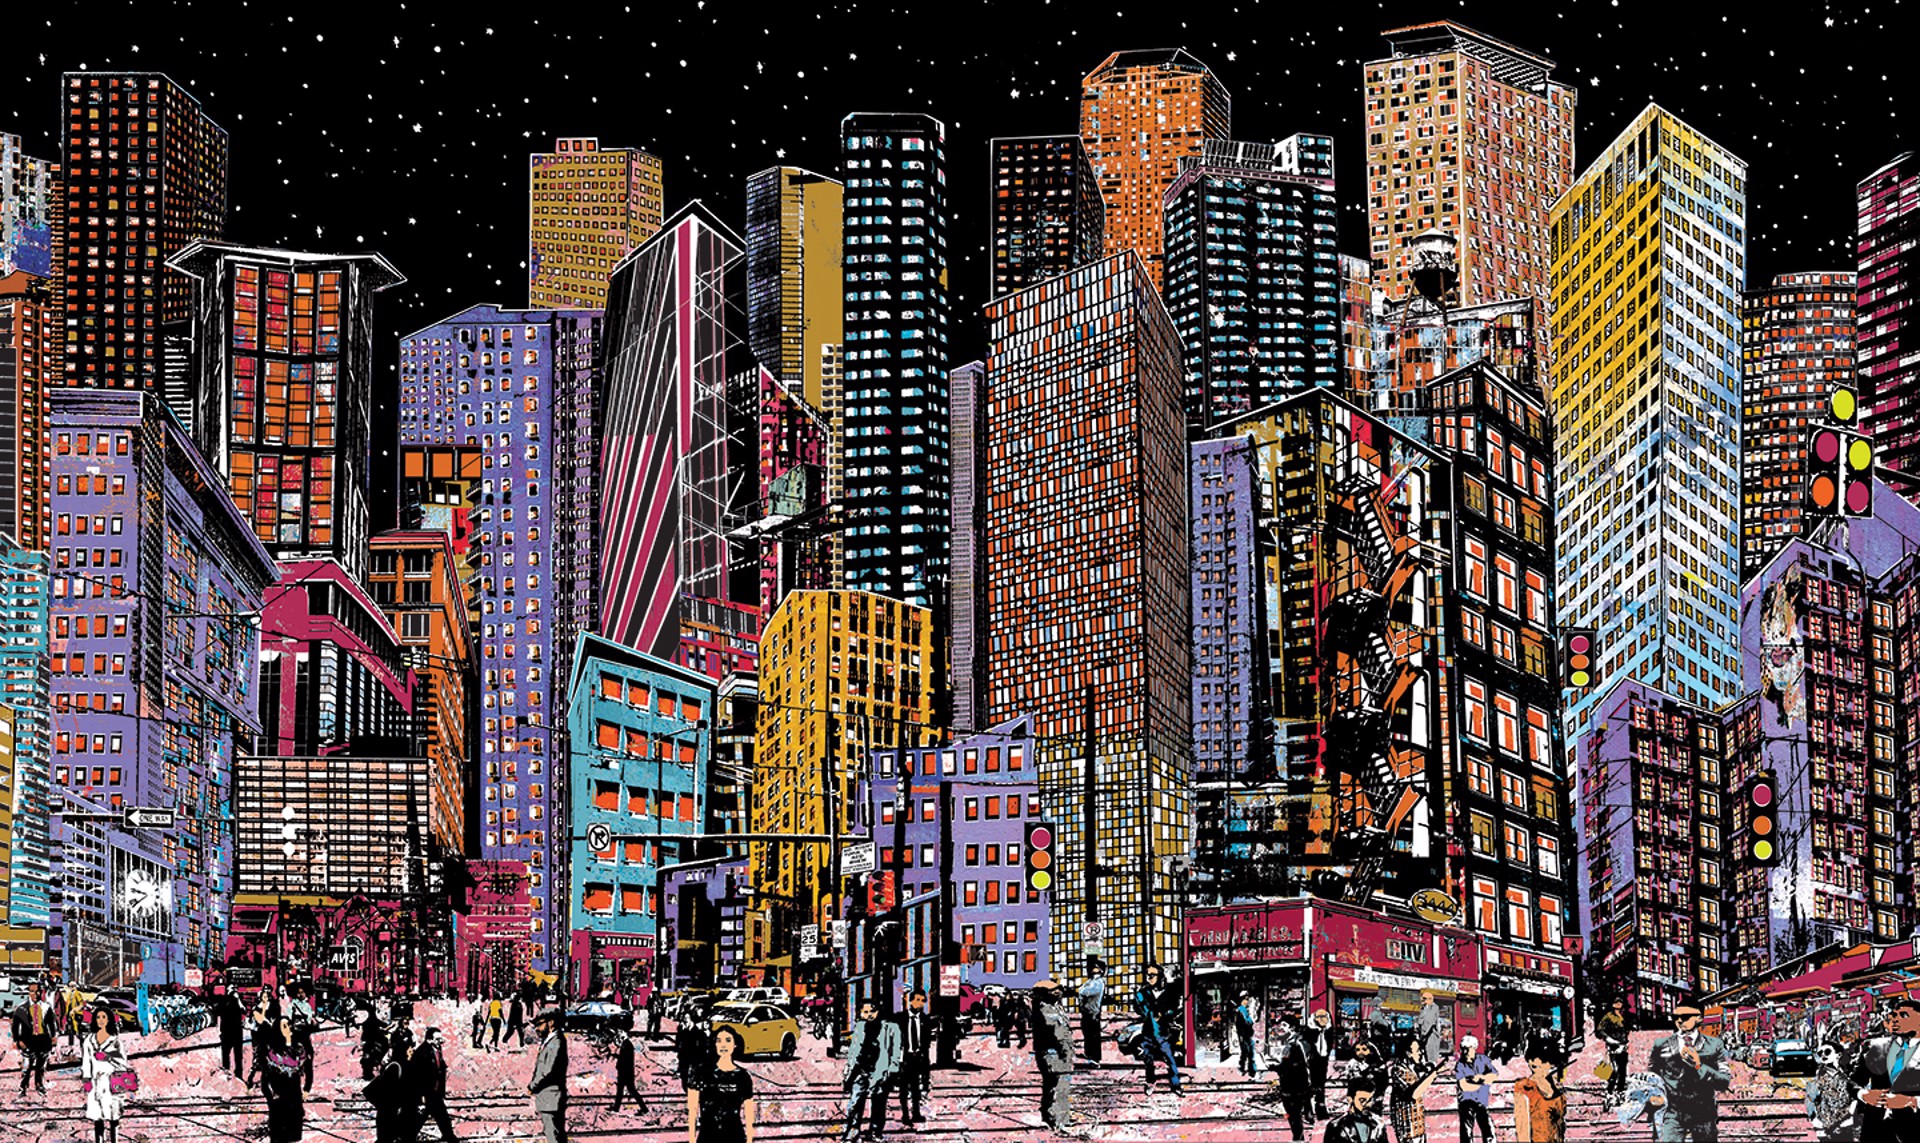 New City 2 by Daryl Thetford